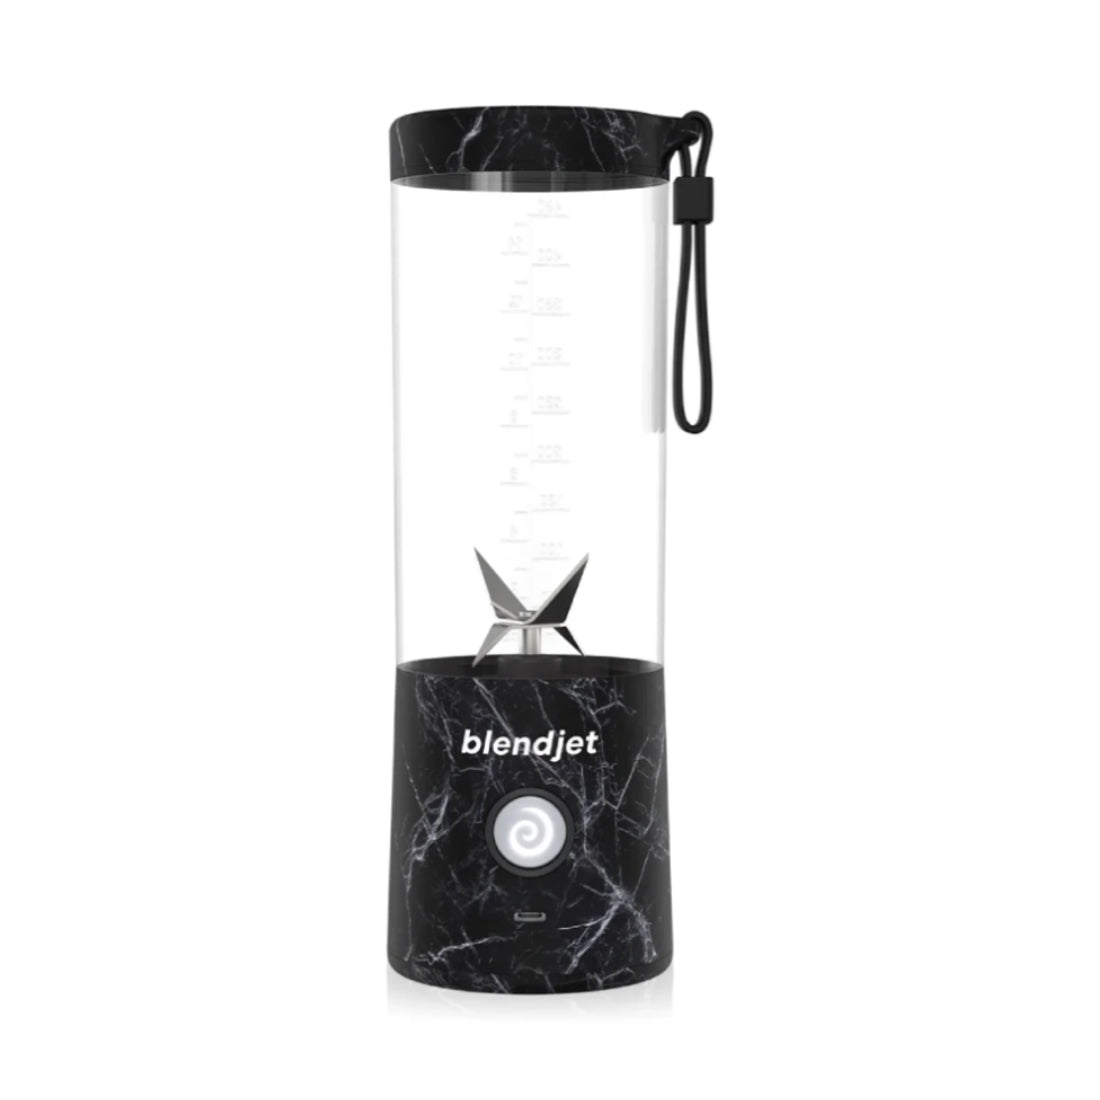 BlendJet 2 Portable Blender - Black Marble - خلاط - Store 974 | ستور ٩٧٤